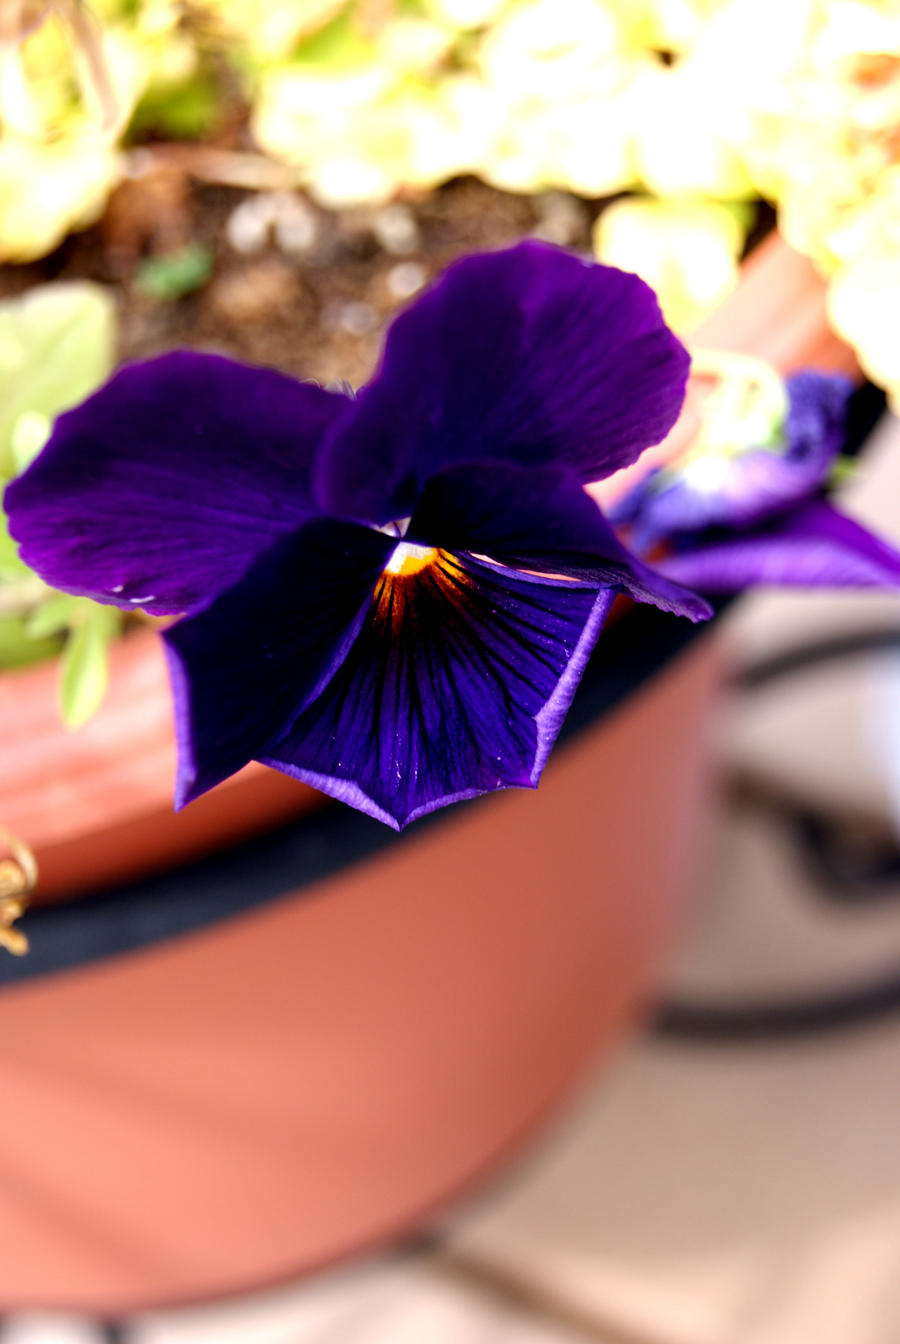 Purple Flower Upclose.